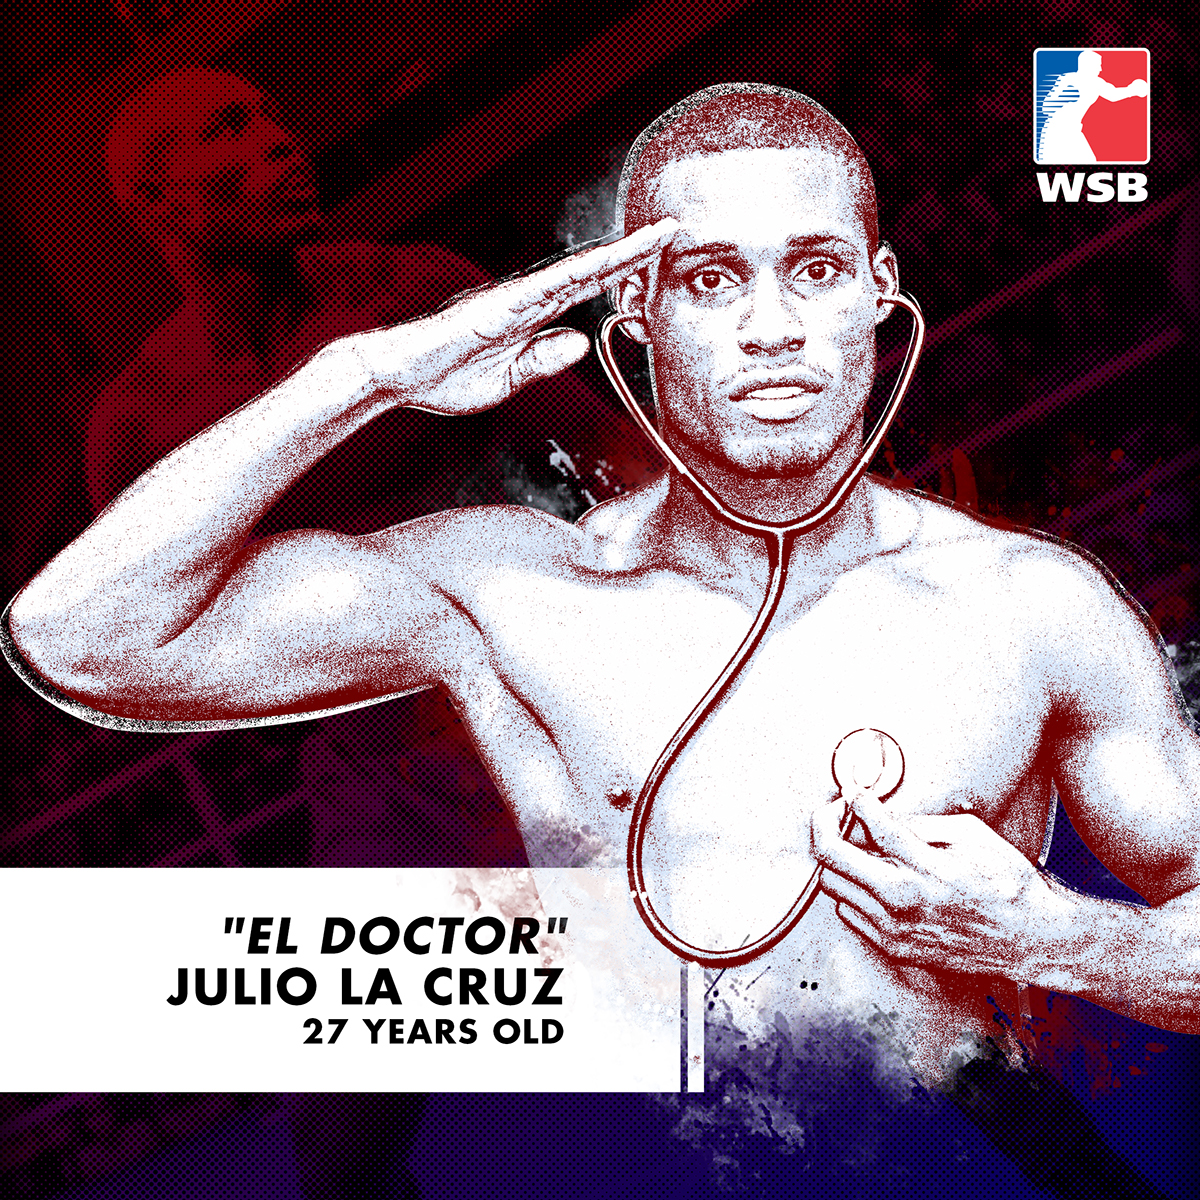 Boxing Fighter wsb world series Dychko la Cruz aiba APB